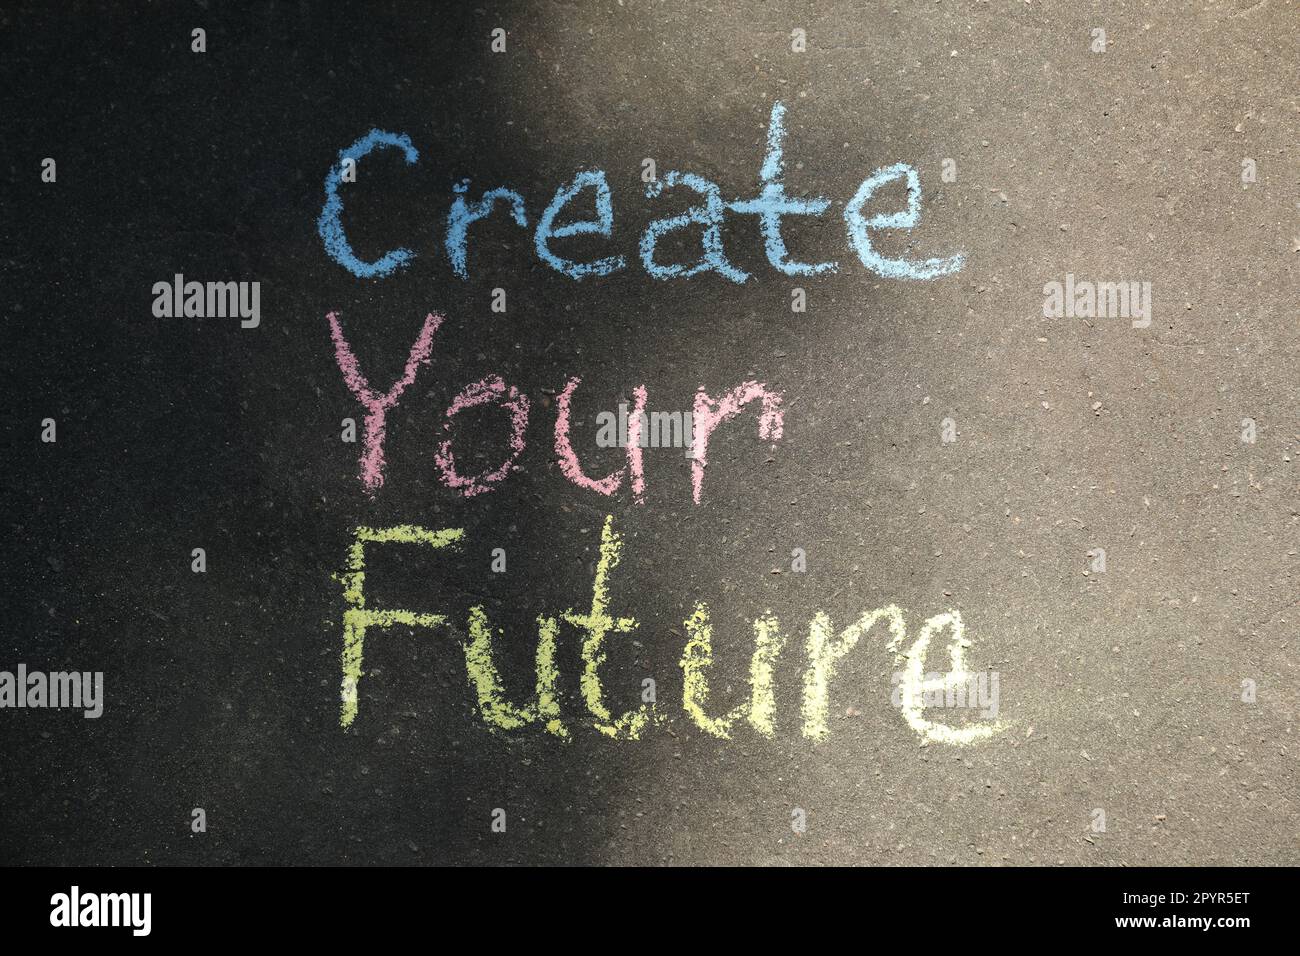 Phrase Create Your Future written on asphalt, top view Stock Photo